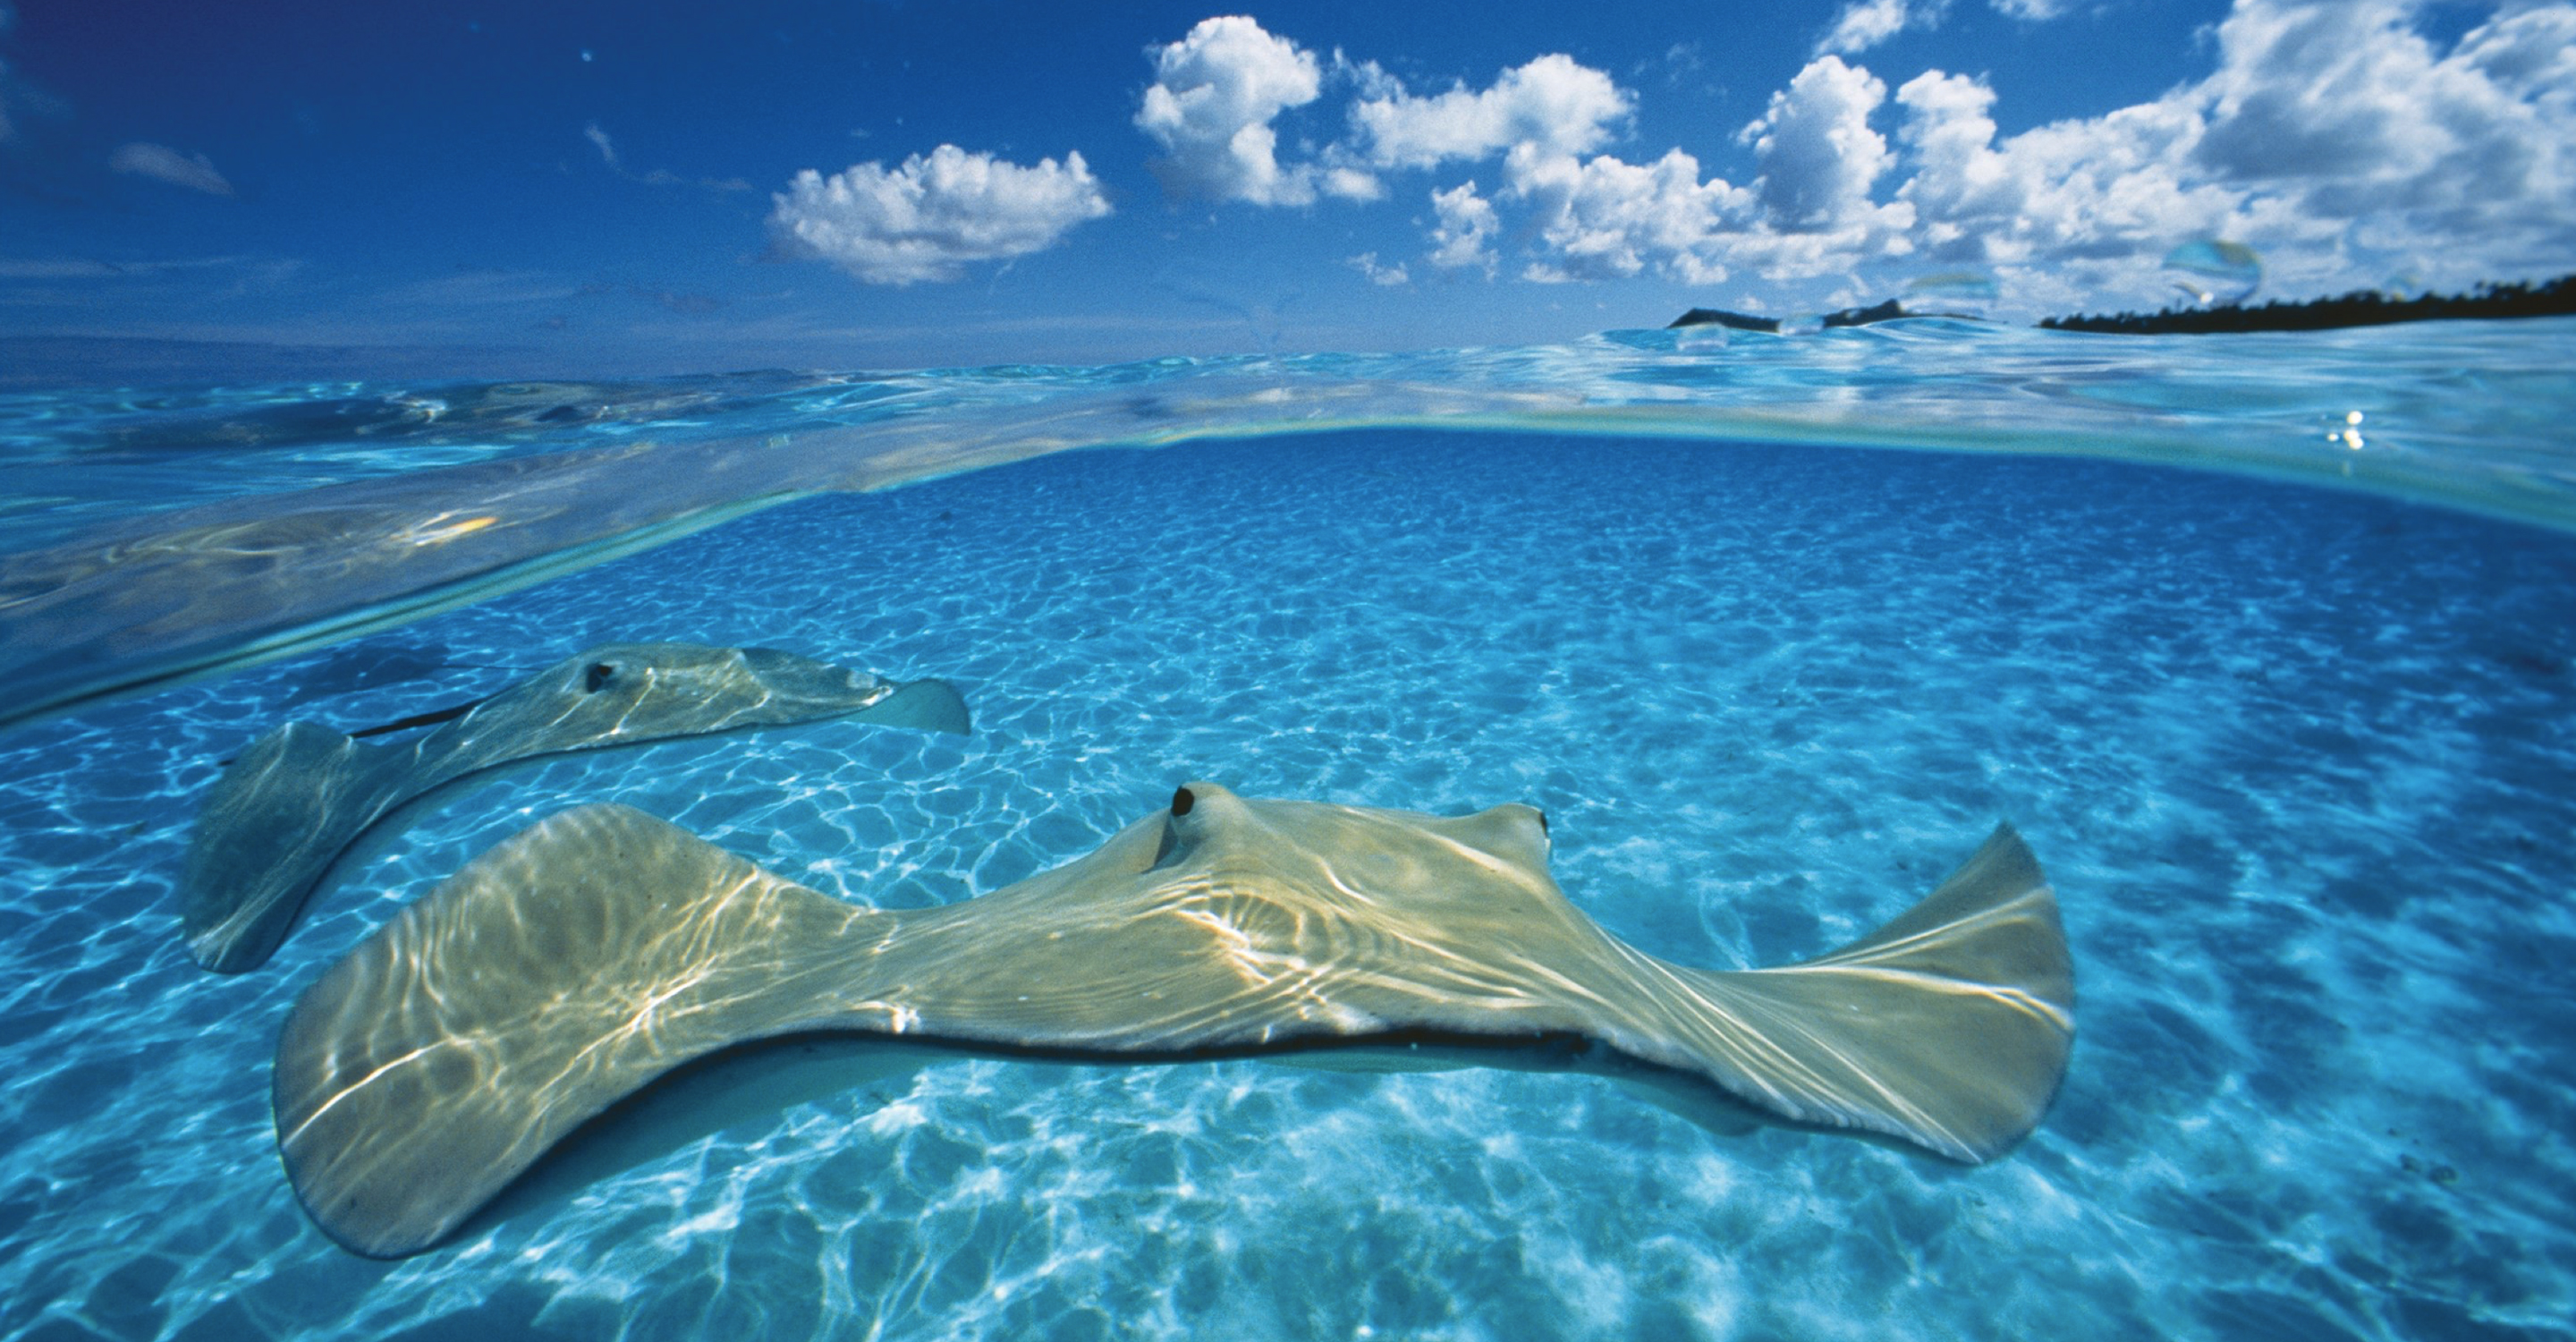 Manta rays underwater, Tuamotu Archipelago